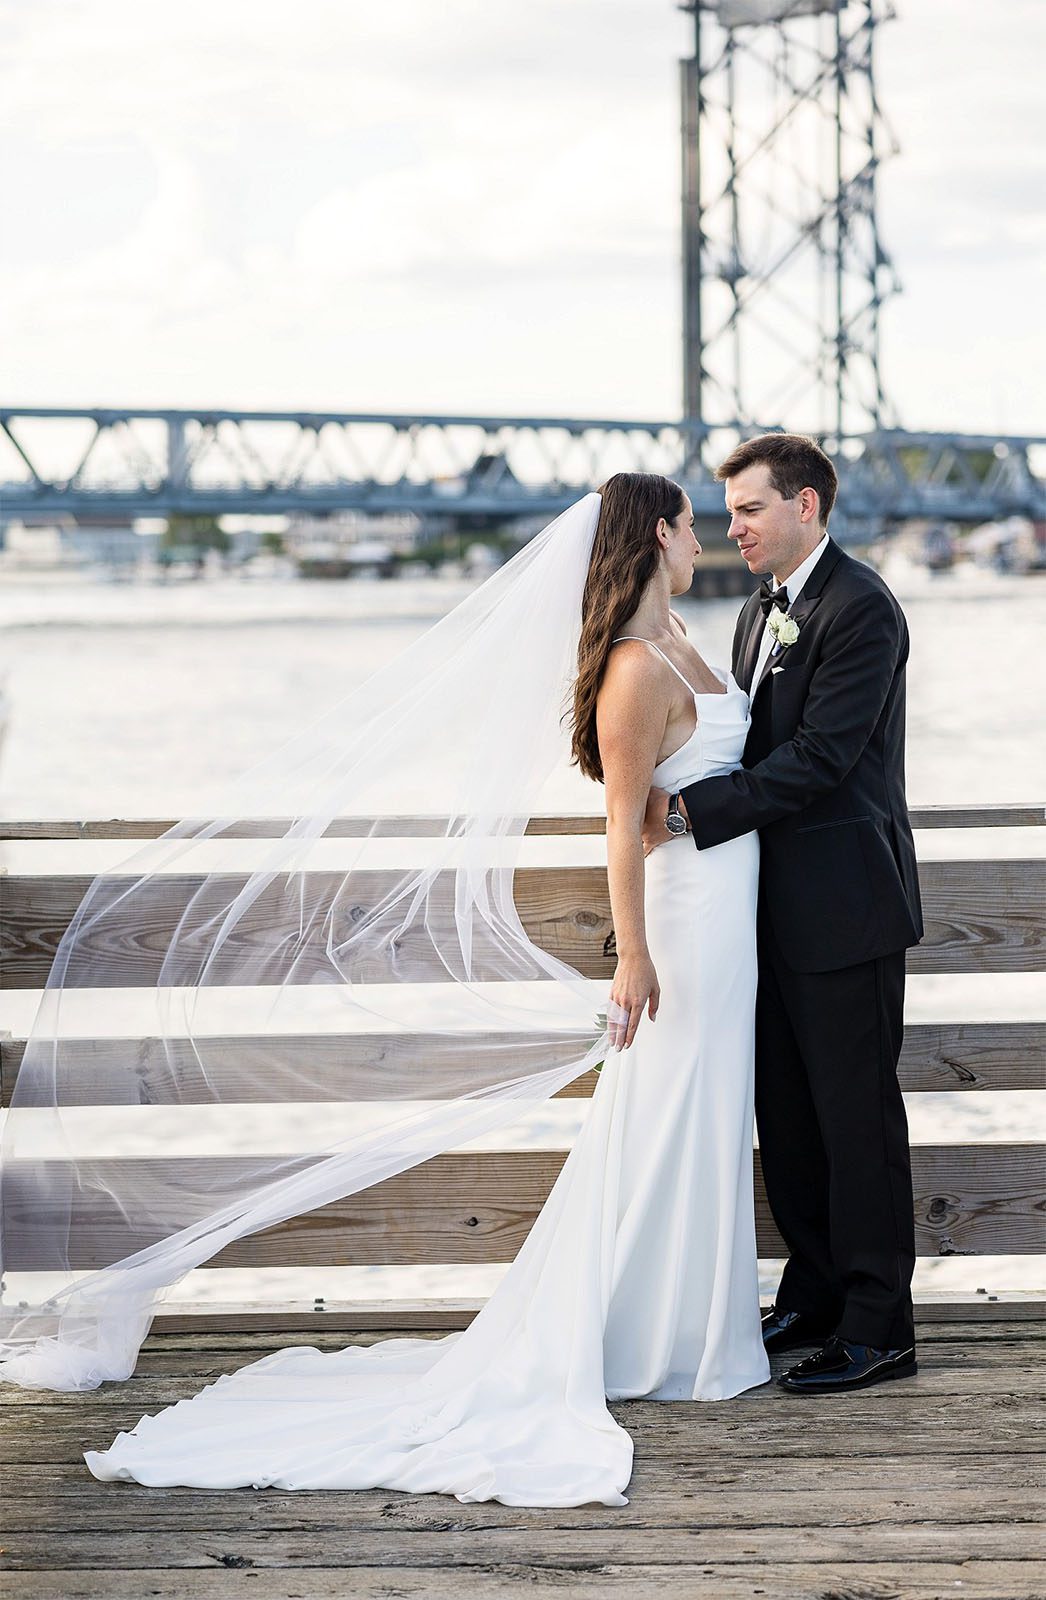 Portsmouth NH Wedding Photographer Erika Follansbee | Memorial Bridge